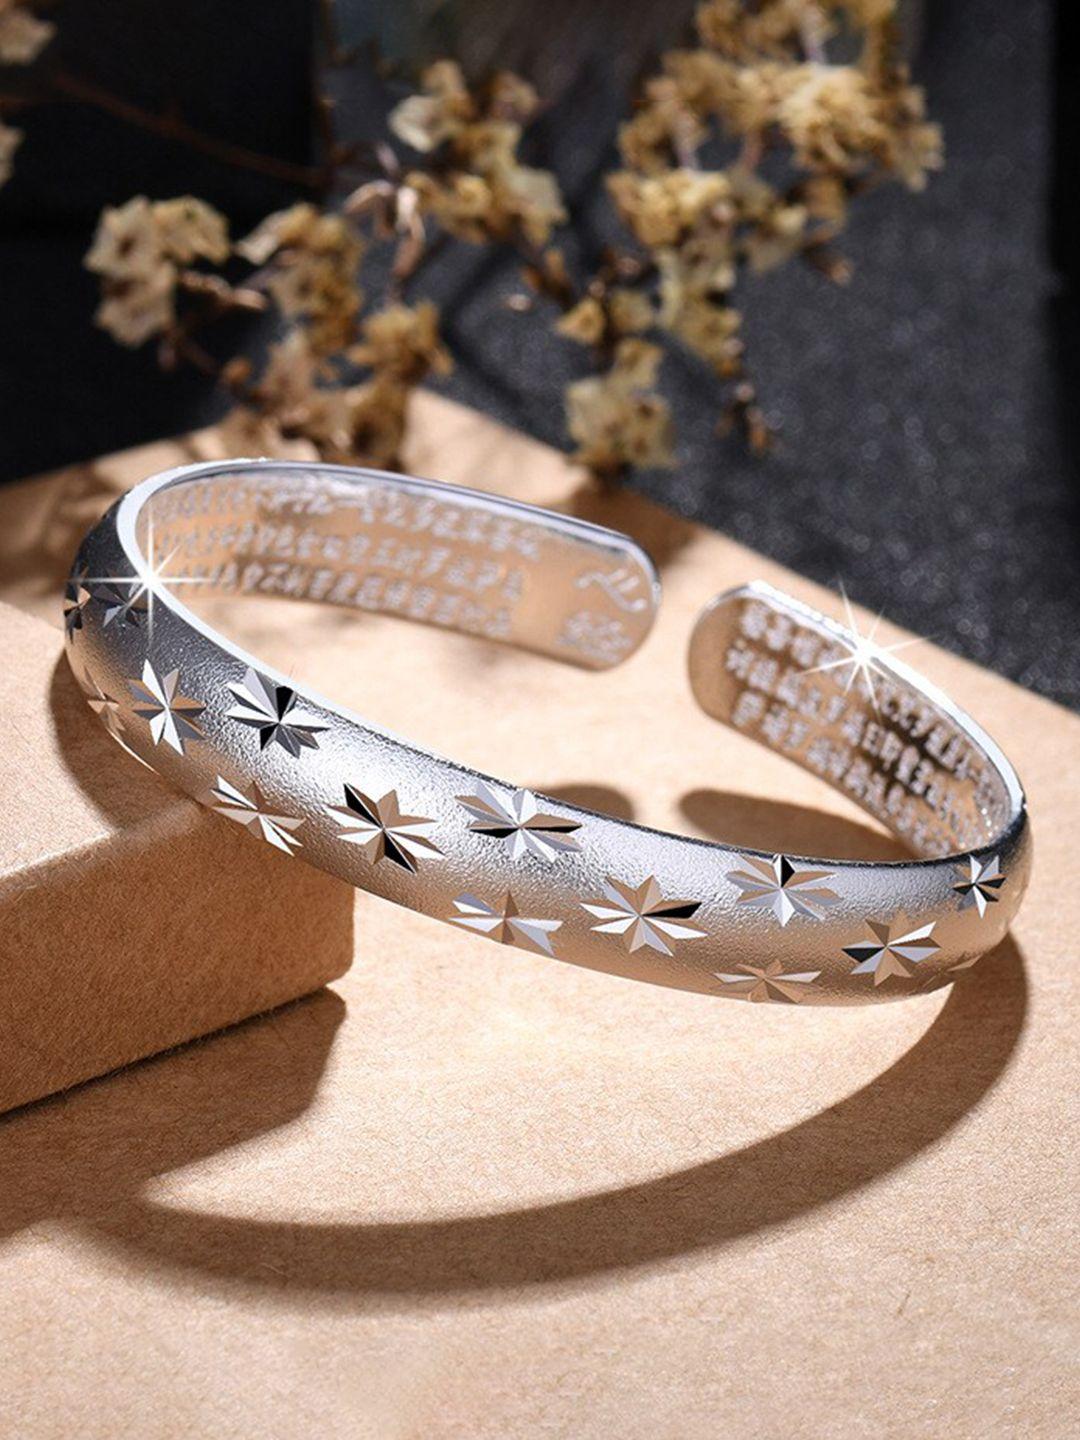 myki silver-plated cuff bracelet